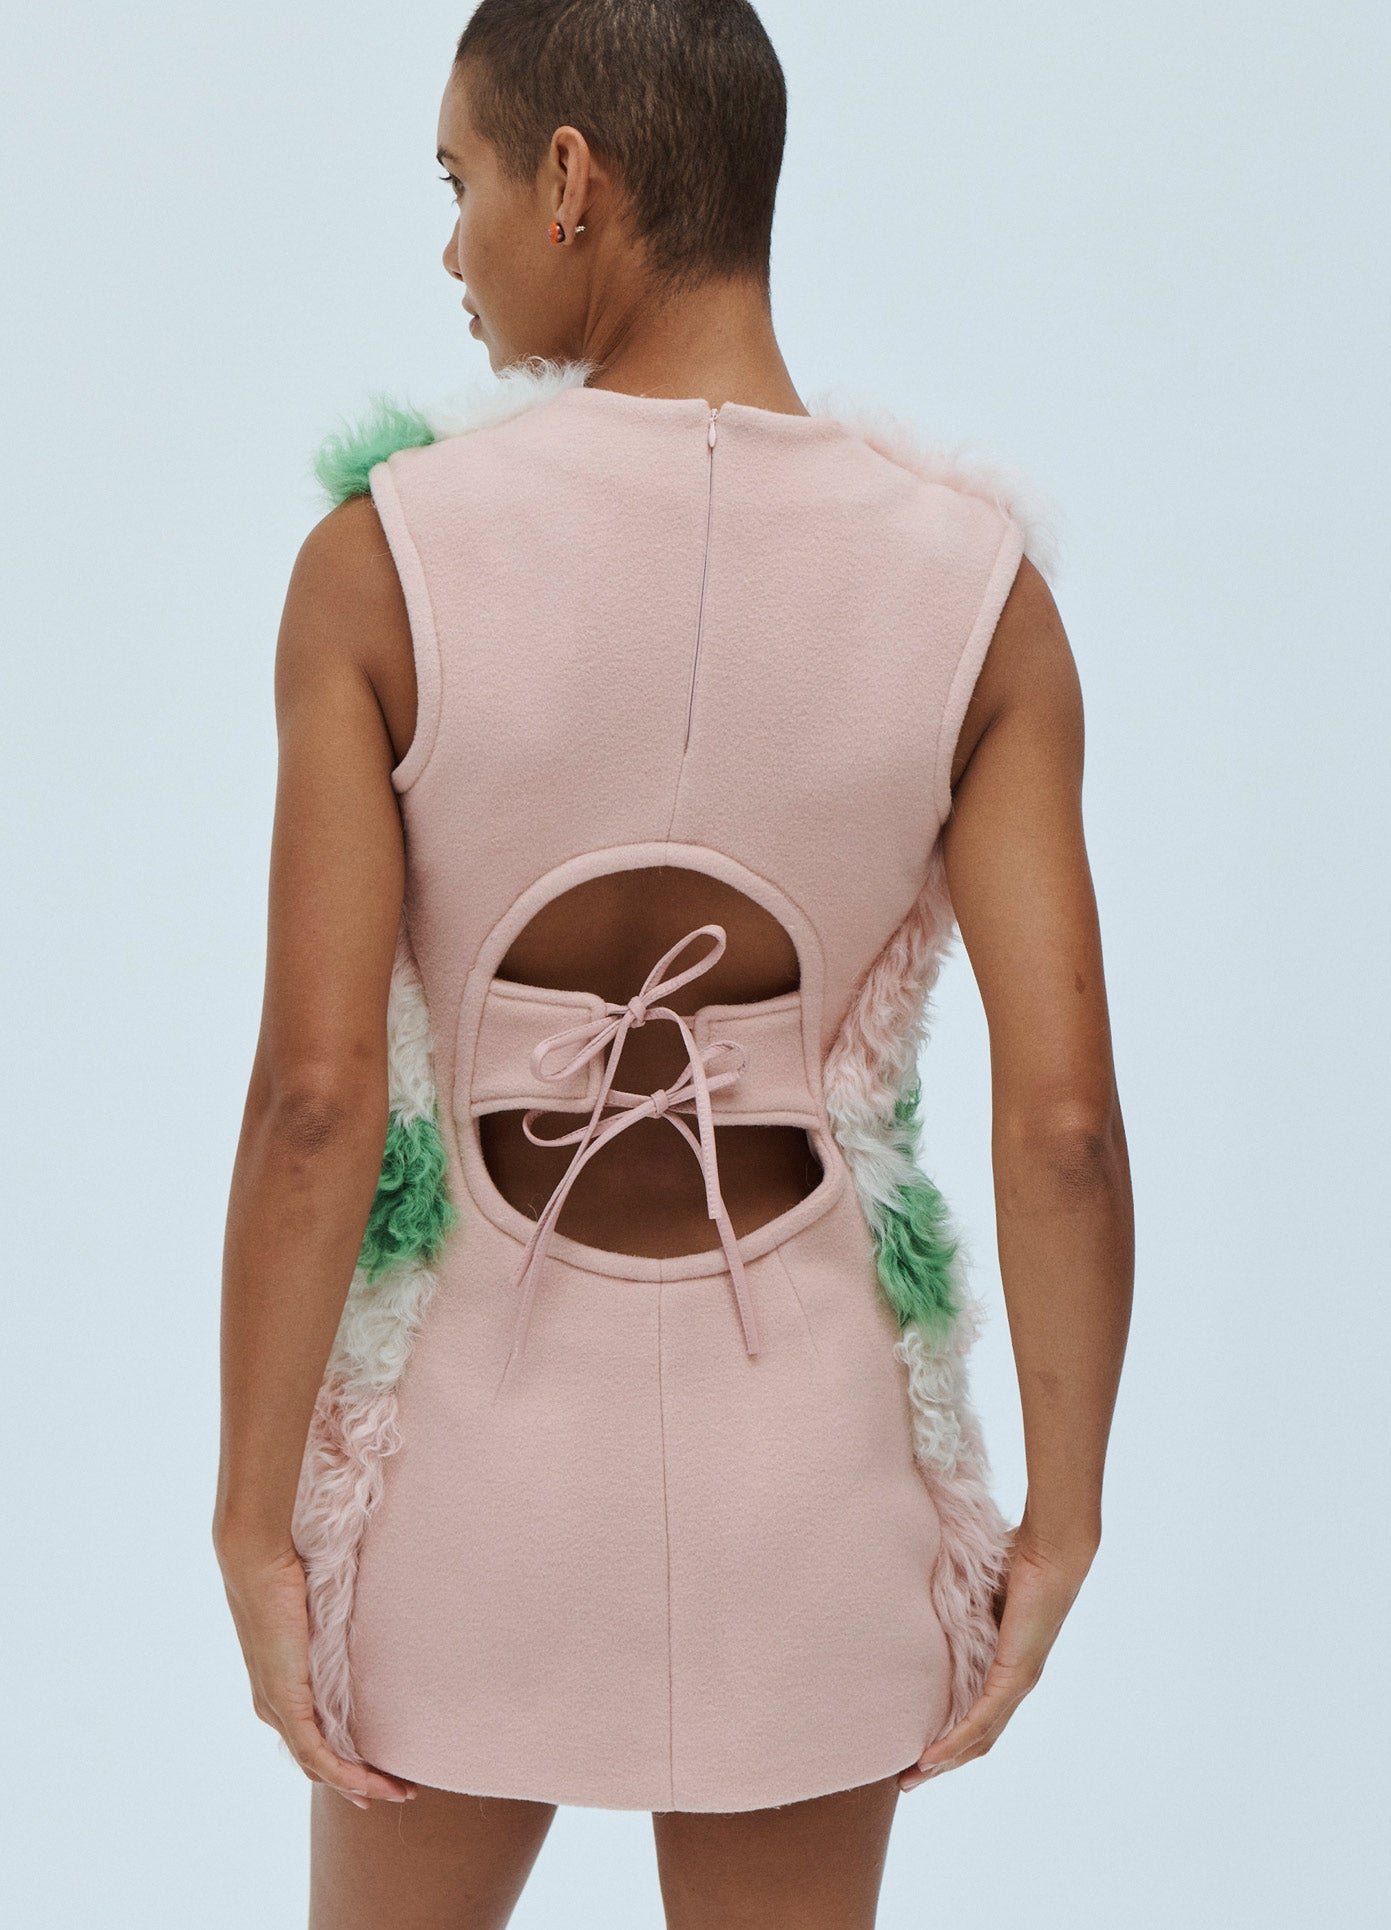 MONSE Spiral Detail Fur Dress in Pink Multi on Model Back View